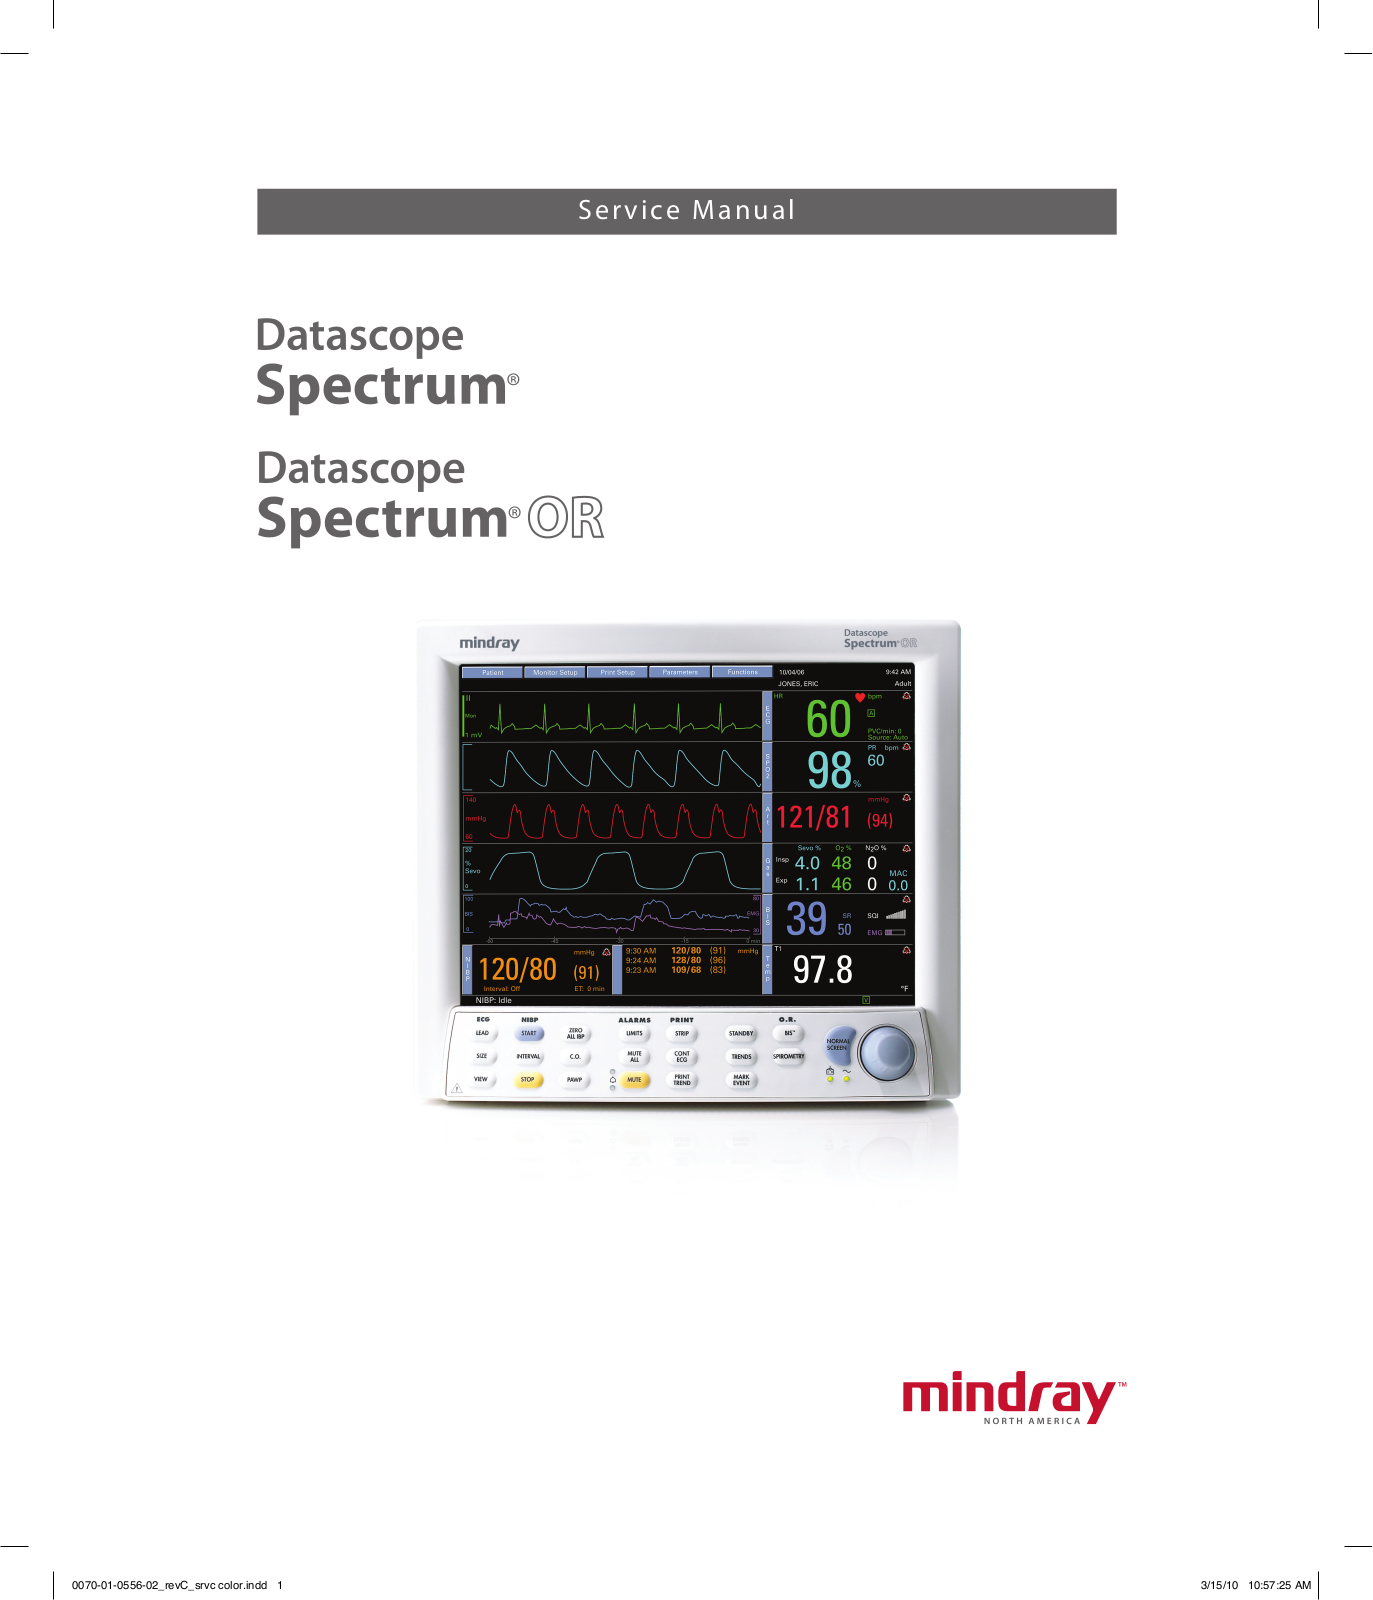 Mindray Datascope Spectrum User manual